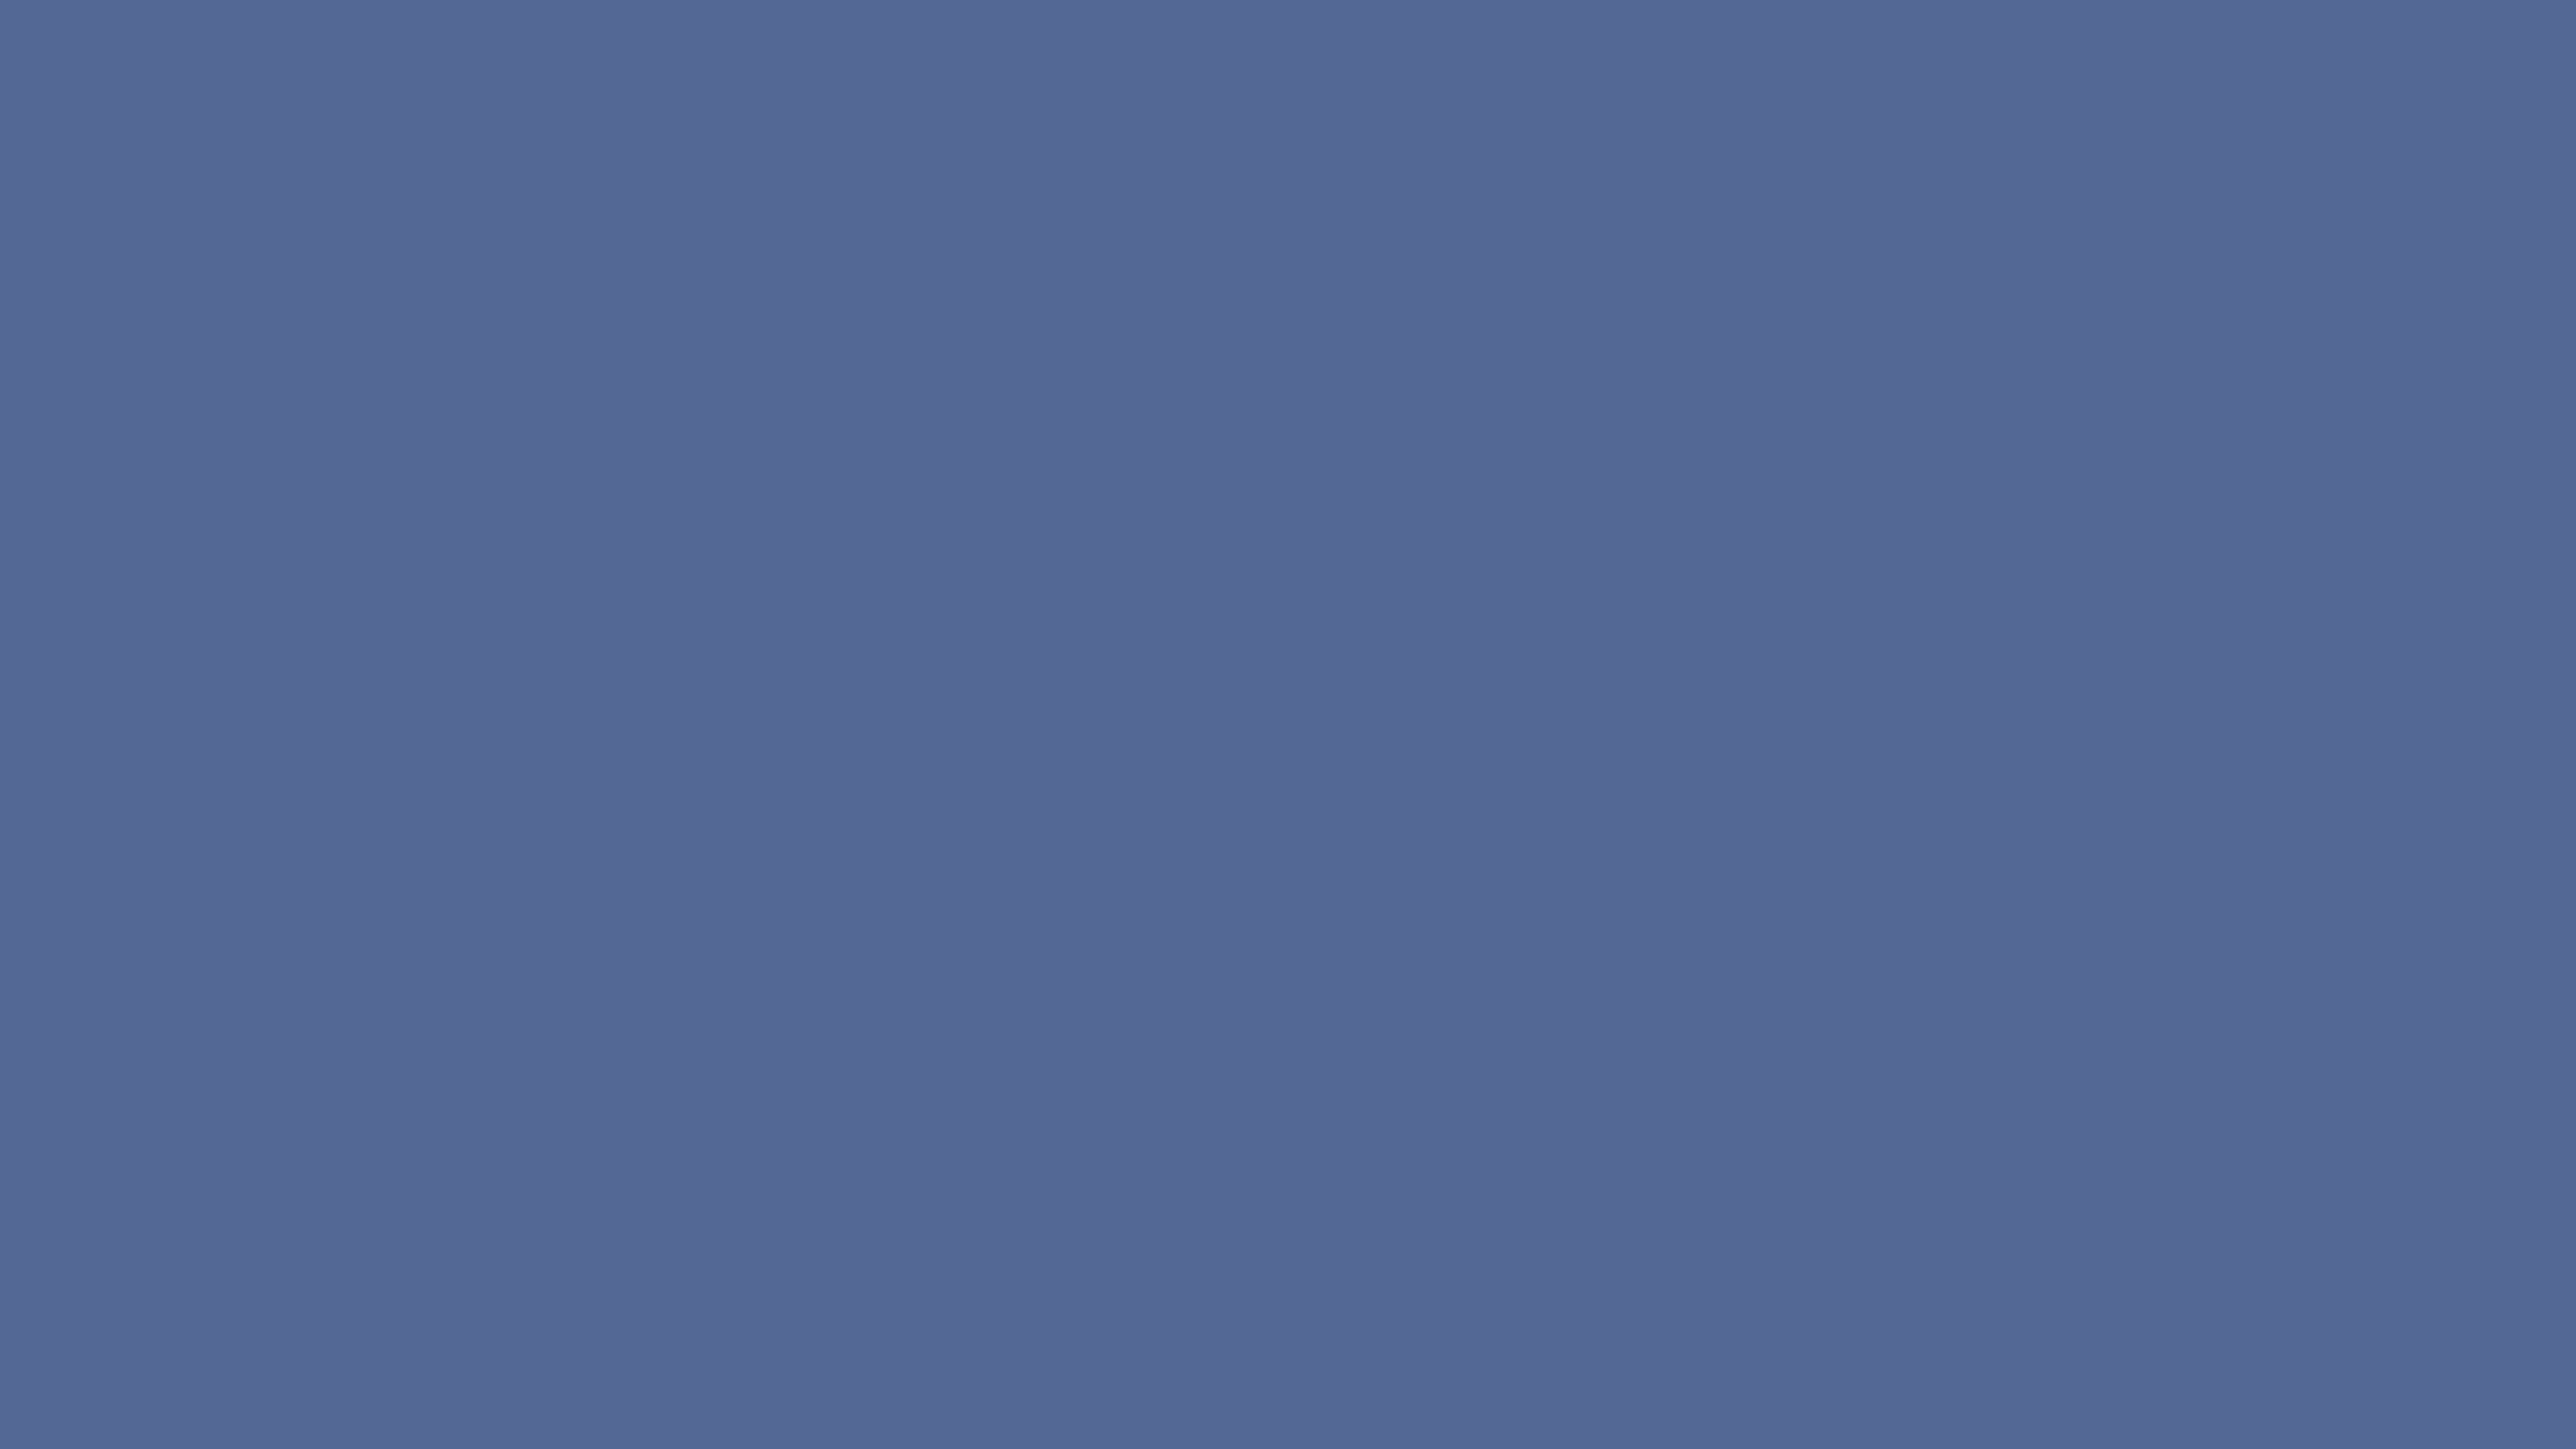 7680x4320 UCLA Blue Solid Color Background